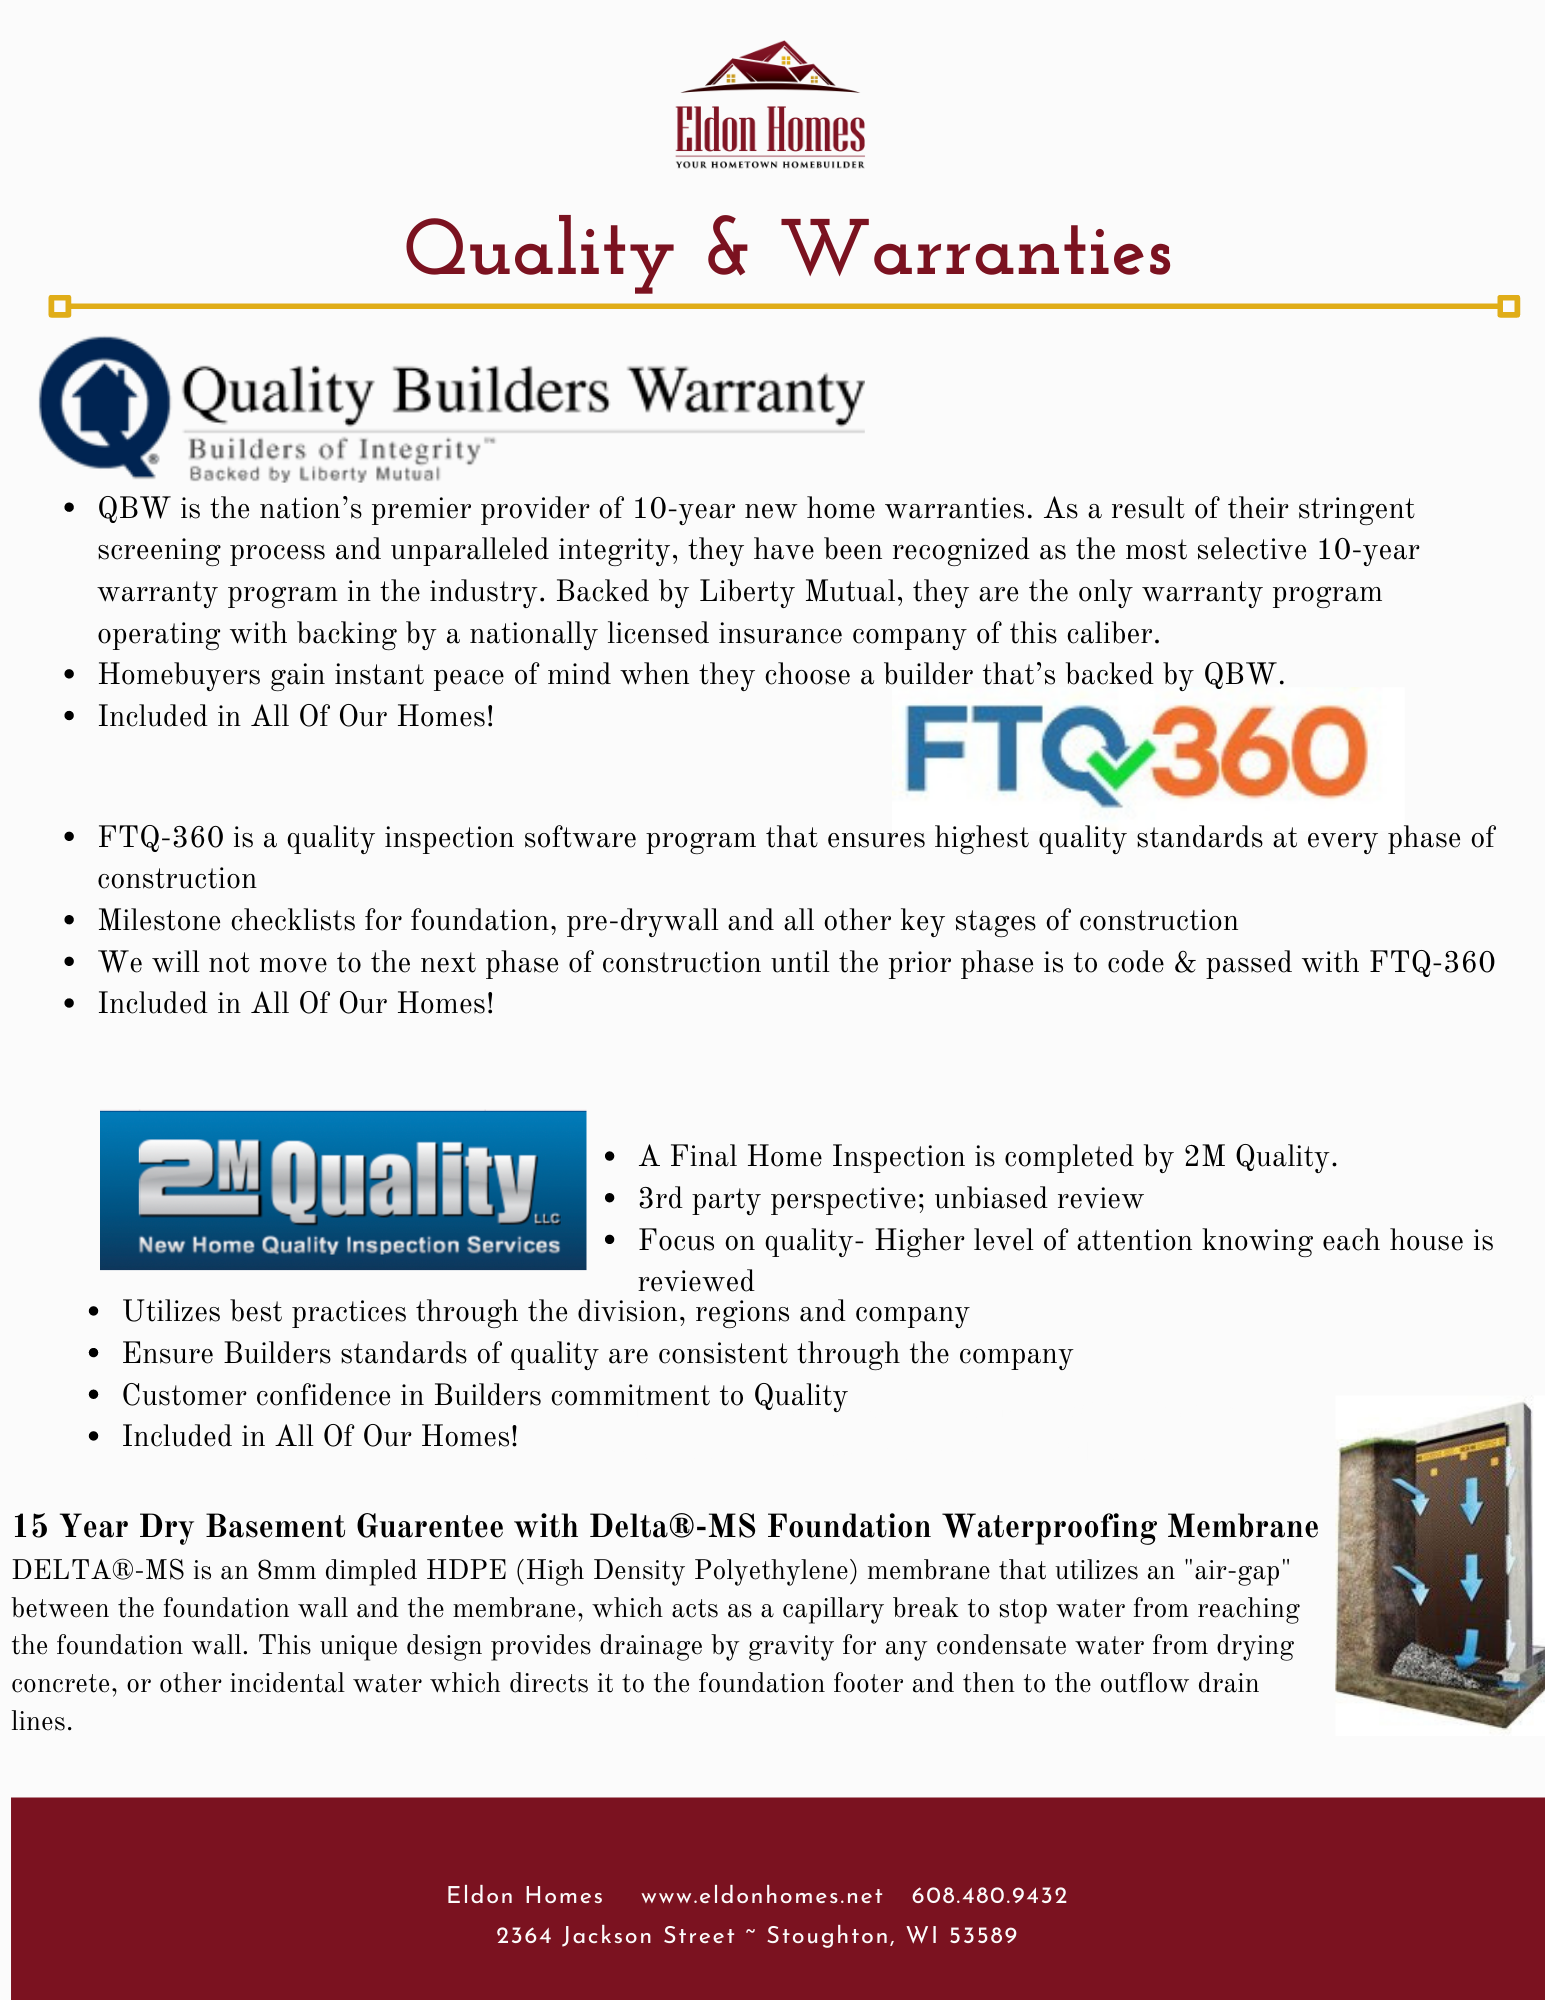 Eldon Homes Quality and Warranties List